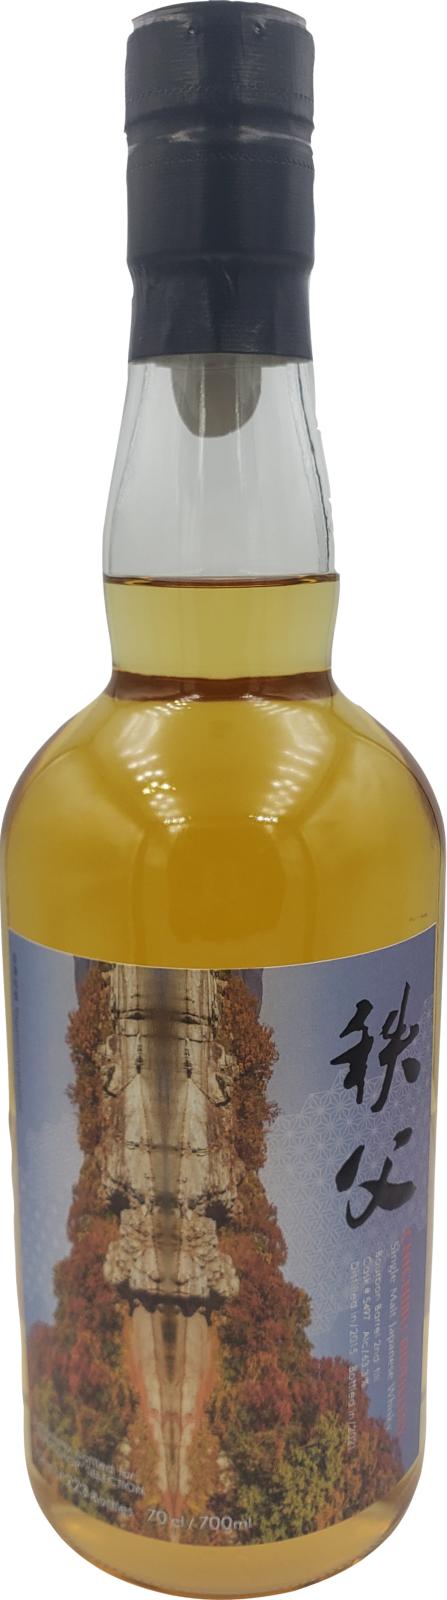 Chichibu 2015 Bourbon Barrel 2nd Fill #5497 Spirits Shop Selection 63.3% 700ml